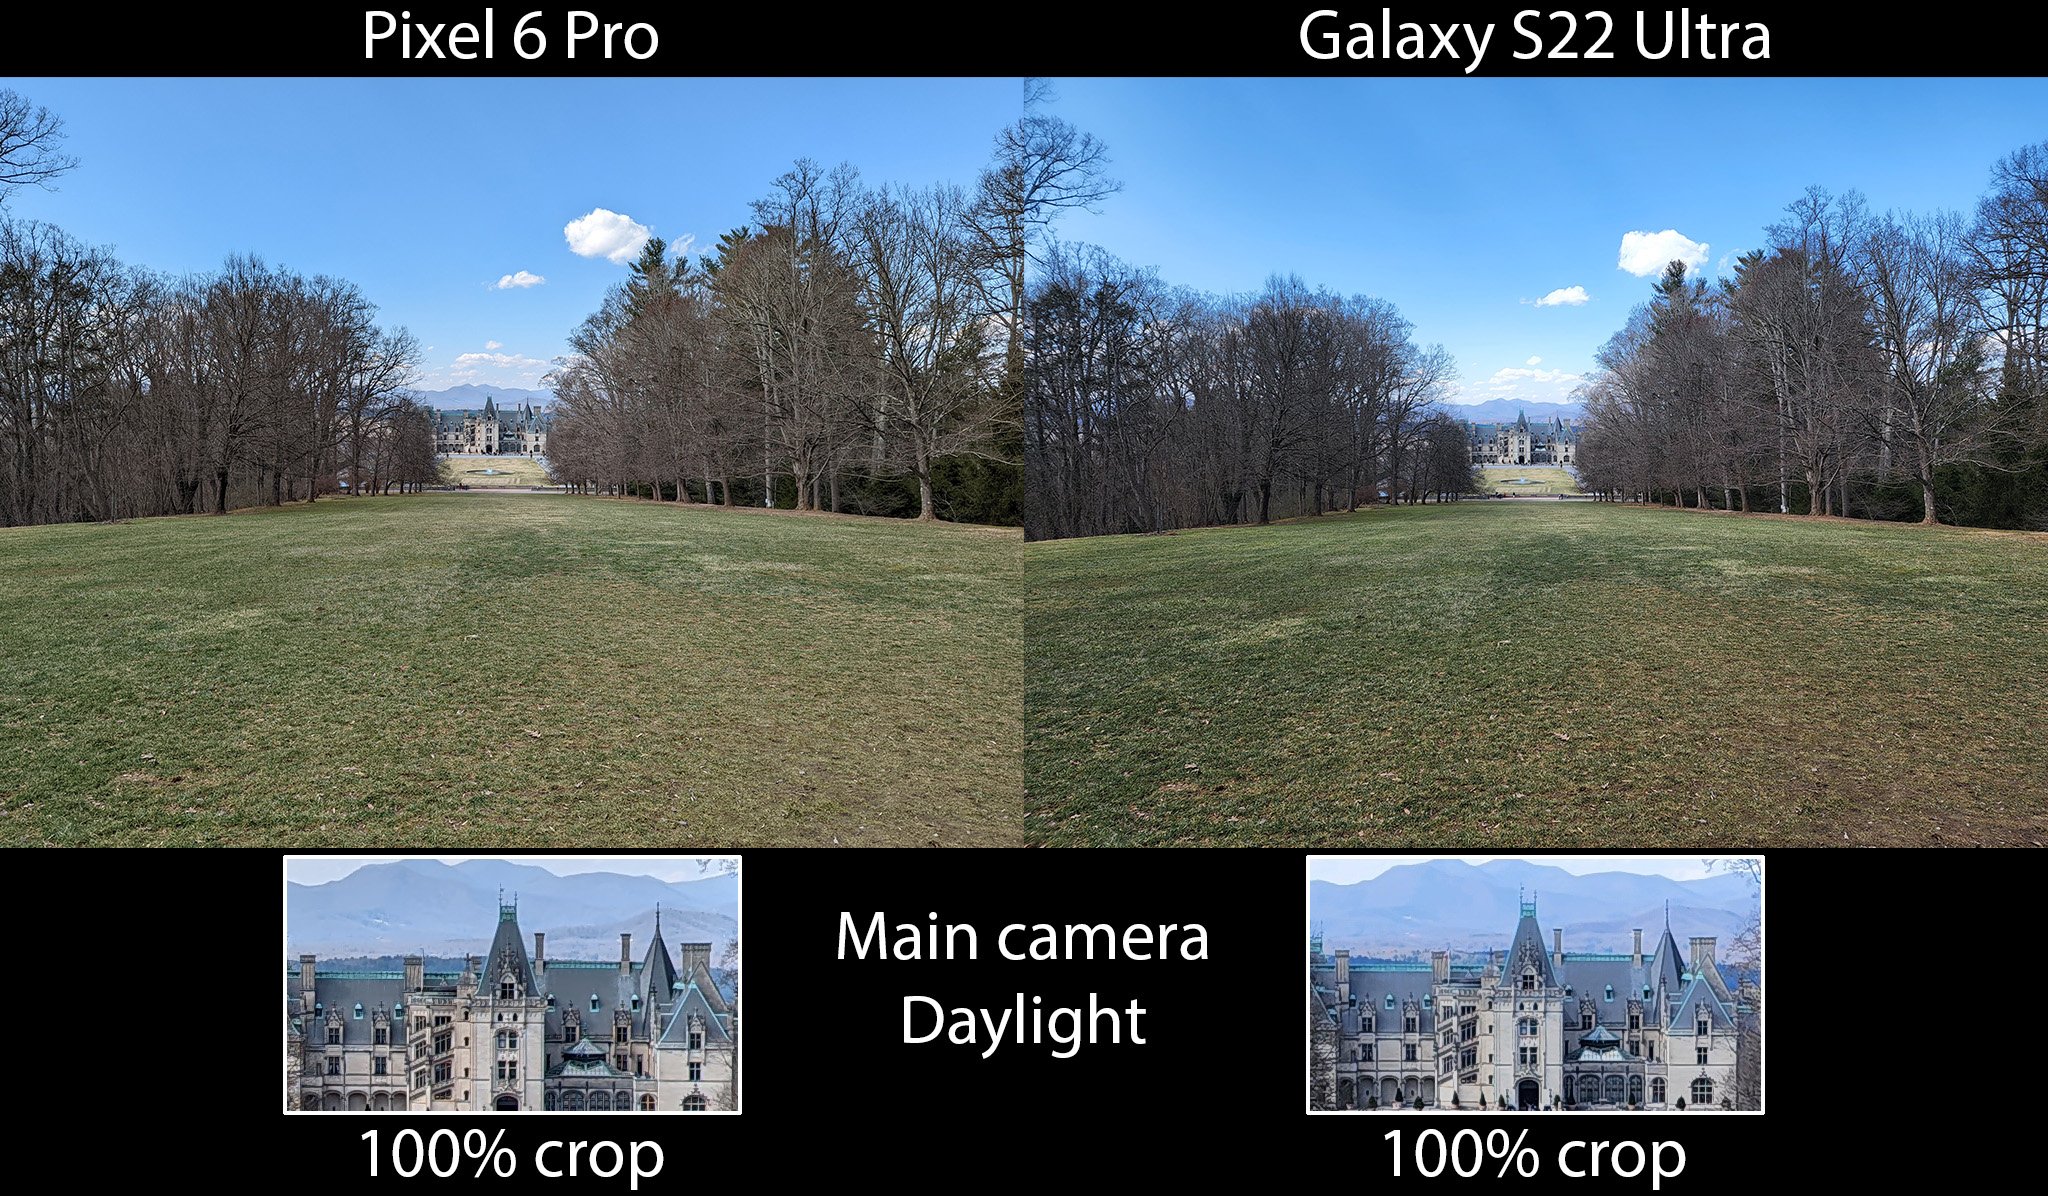 Galaxy S22 Ultra Vs Pixel 6 Pro Main Camera